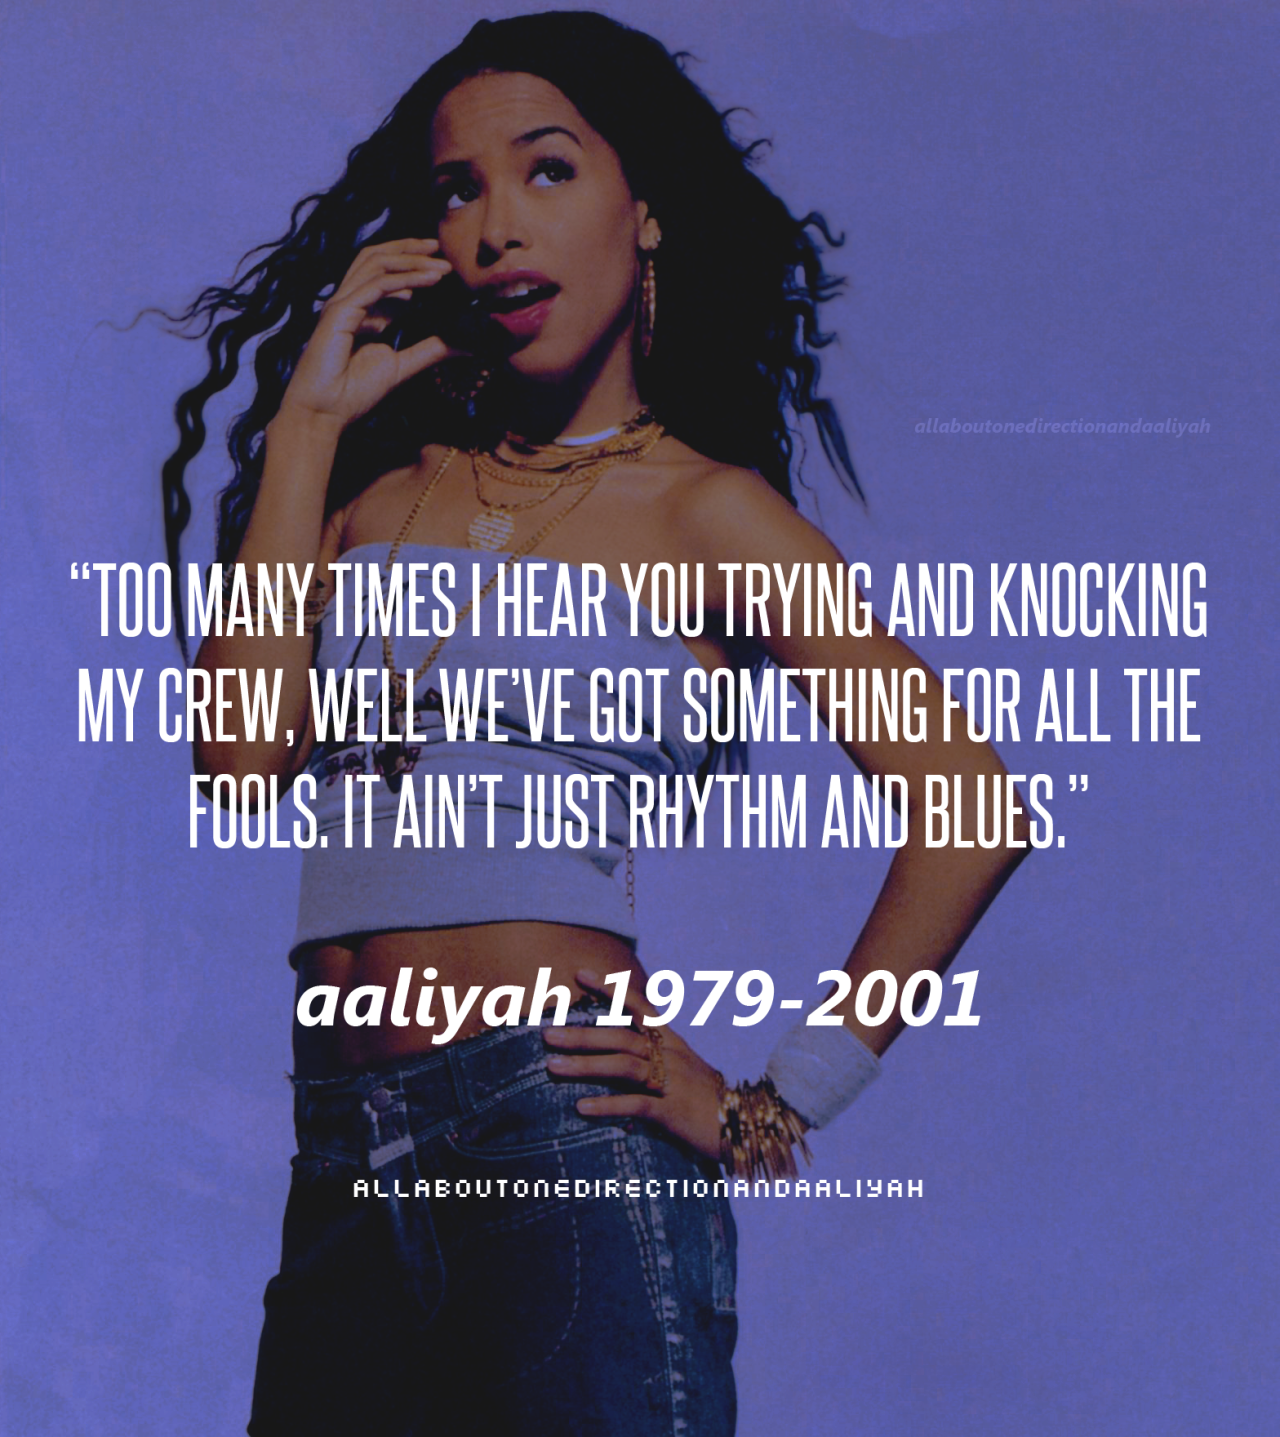 #aaliyah quotes on Tumblr